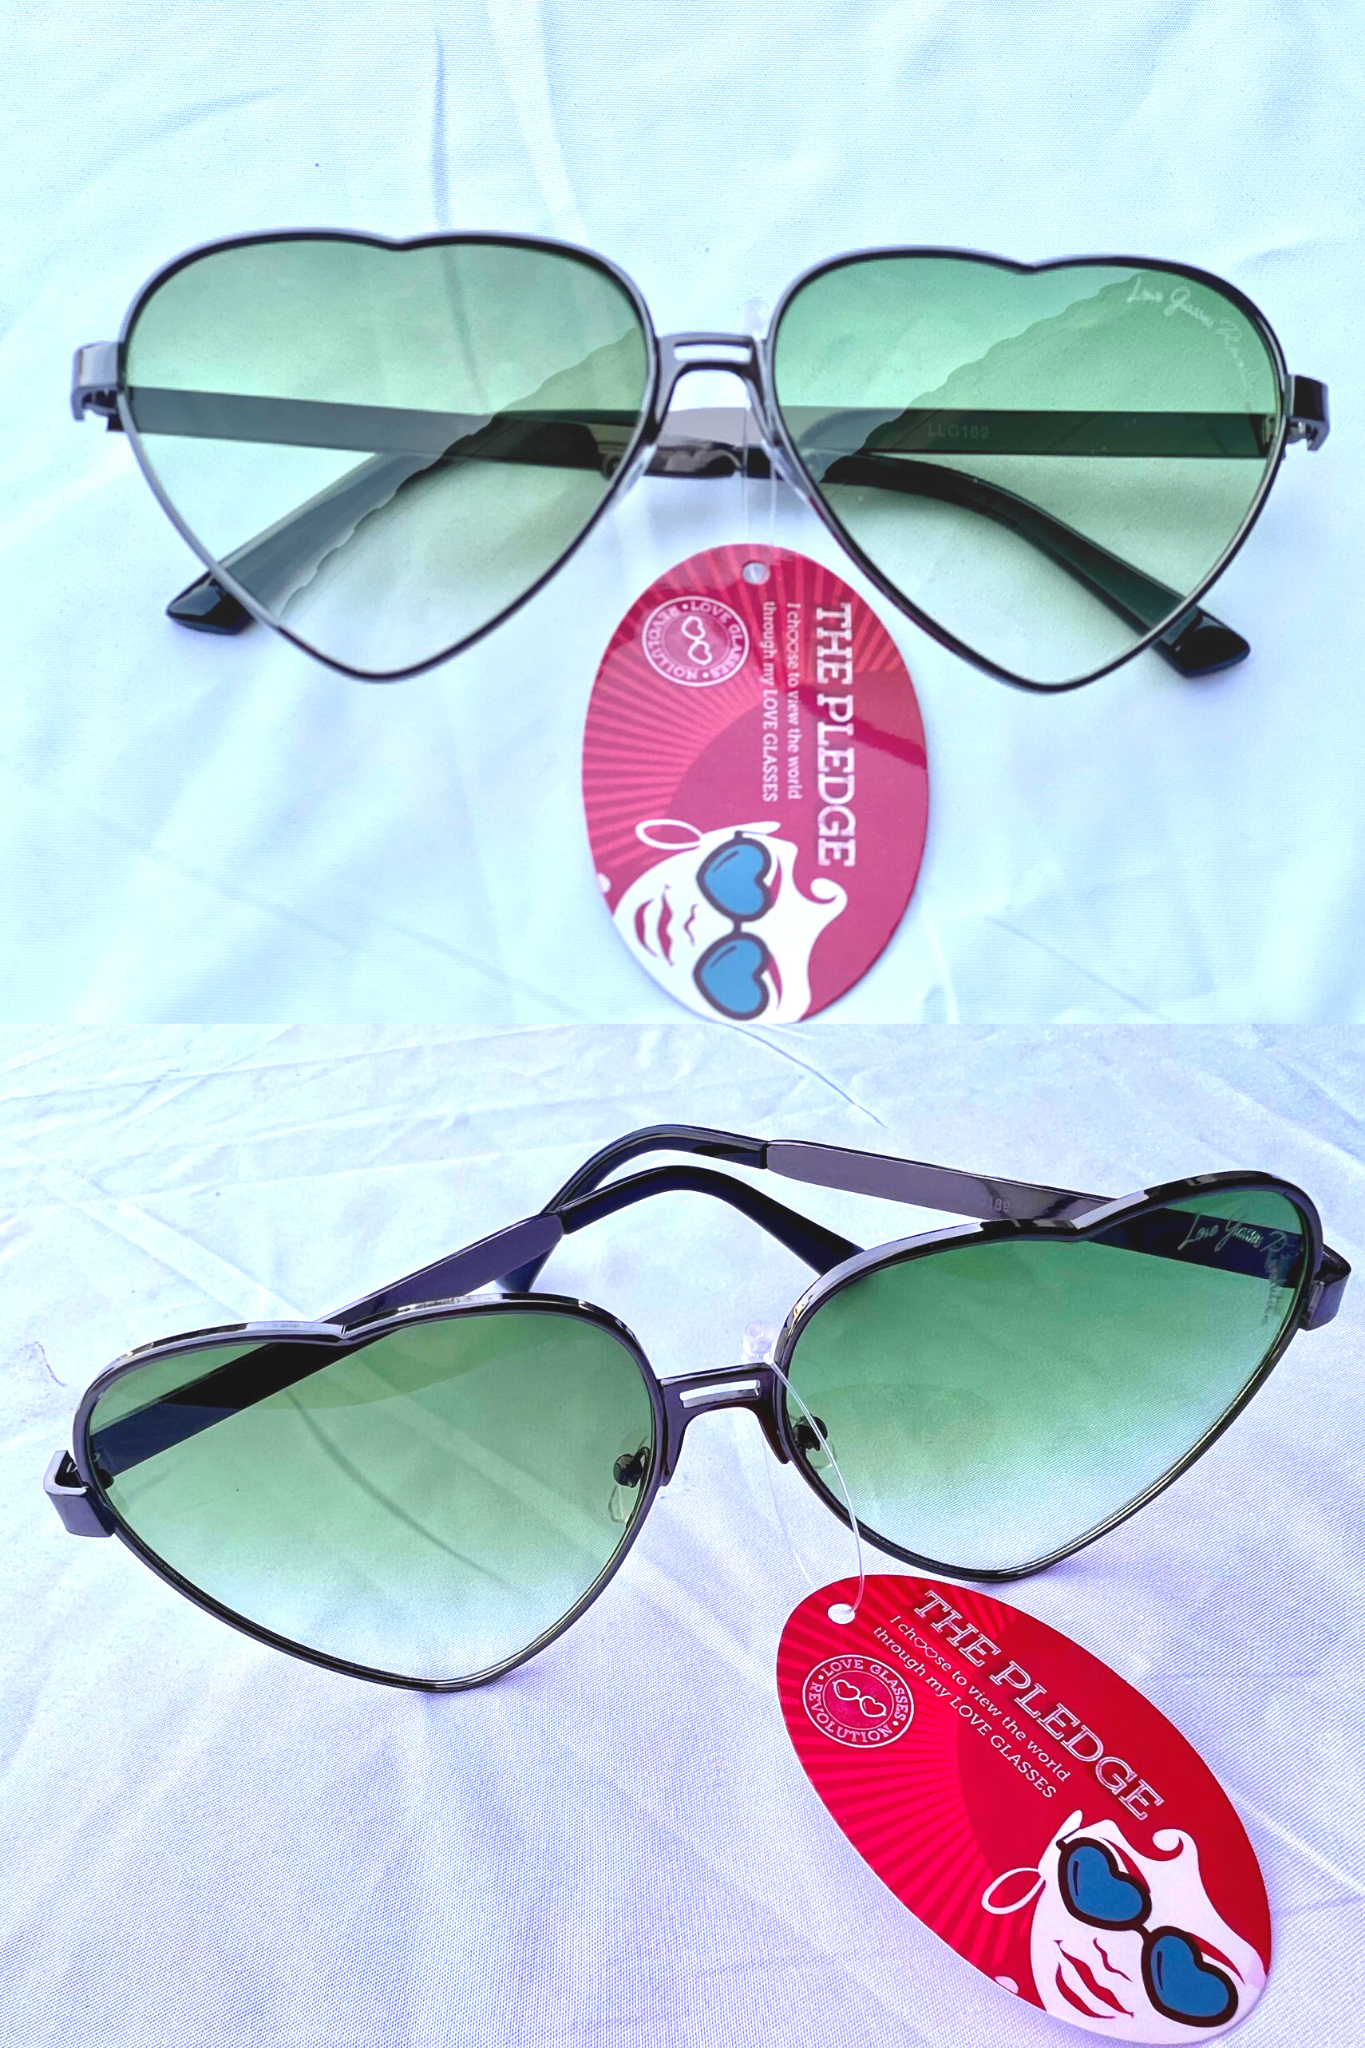 THE LAST 5 Pair left of Green gradient aviator style! - Love Glasses Revolution